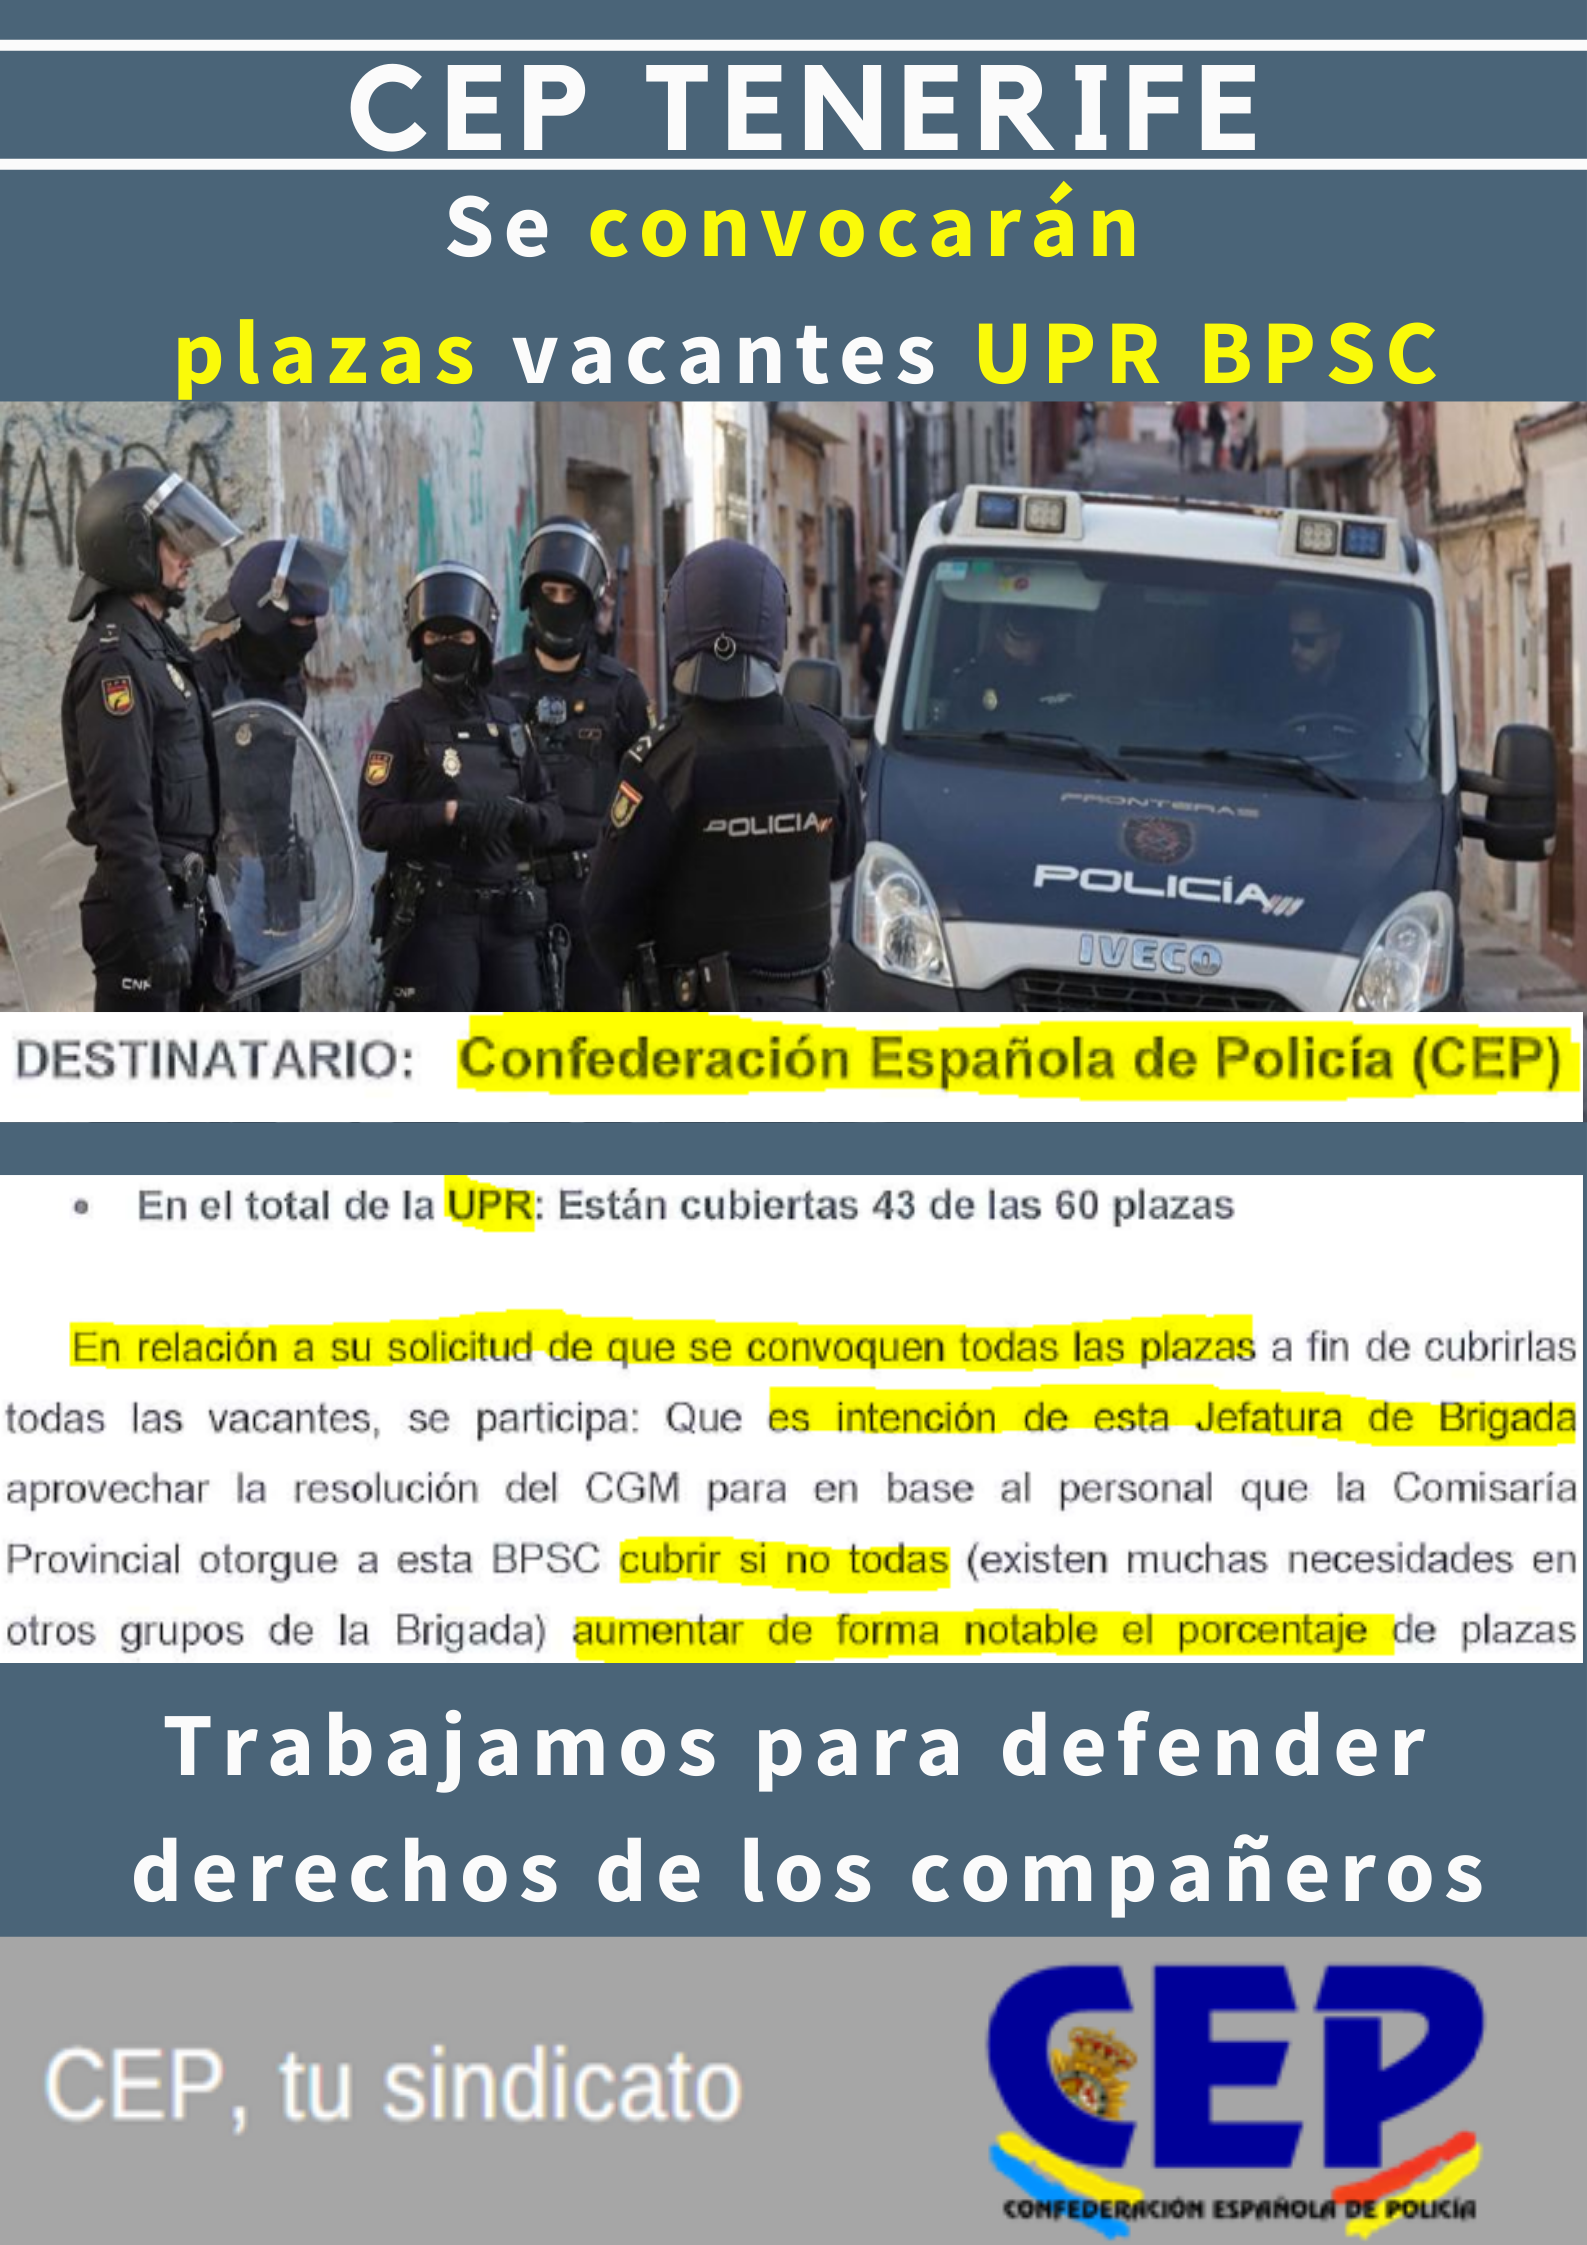 Convocarán plazas vacantes UPR BPSC, después de petición CEP